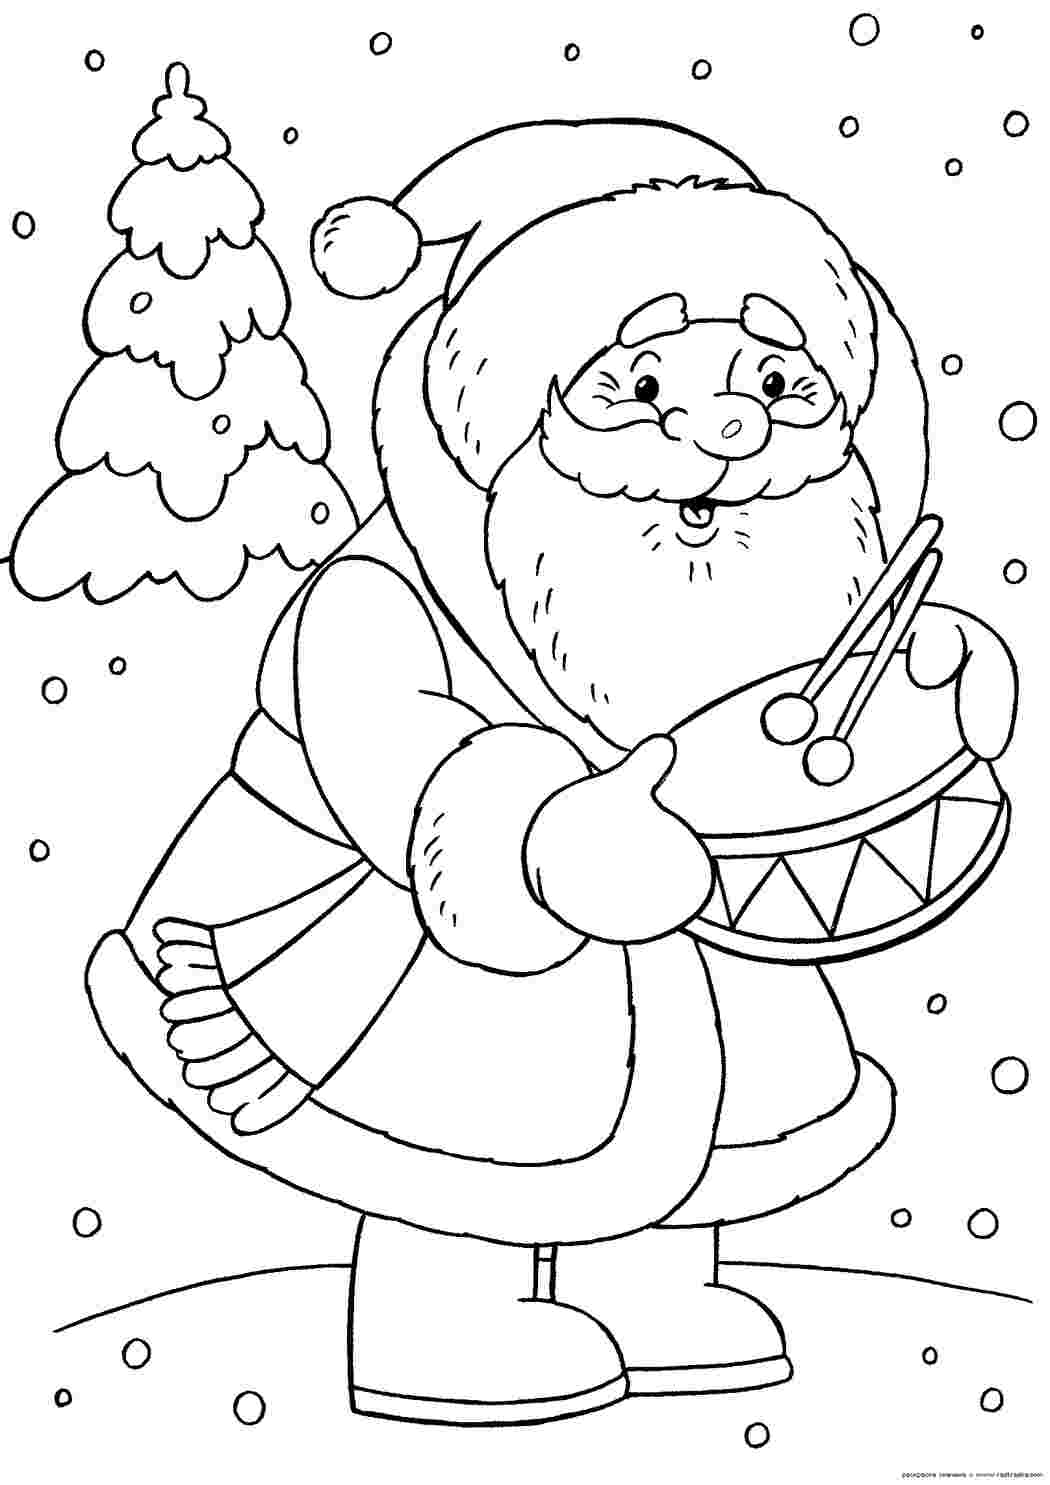 Раскраски Дед мороз дарит подарки Мешок новогодних подарков и дед мороз